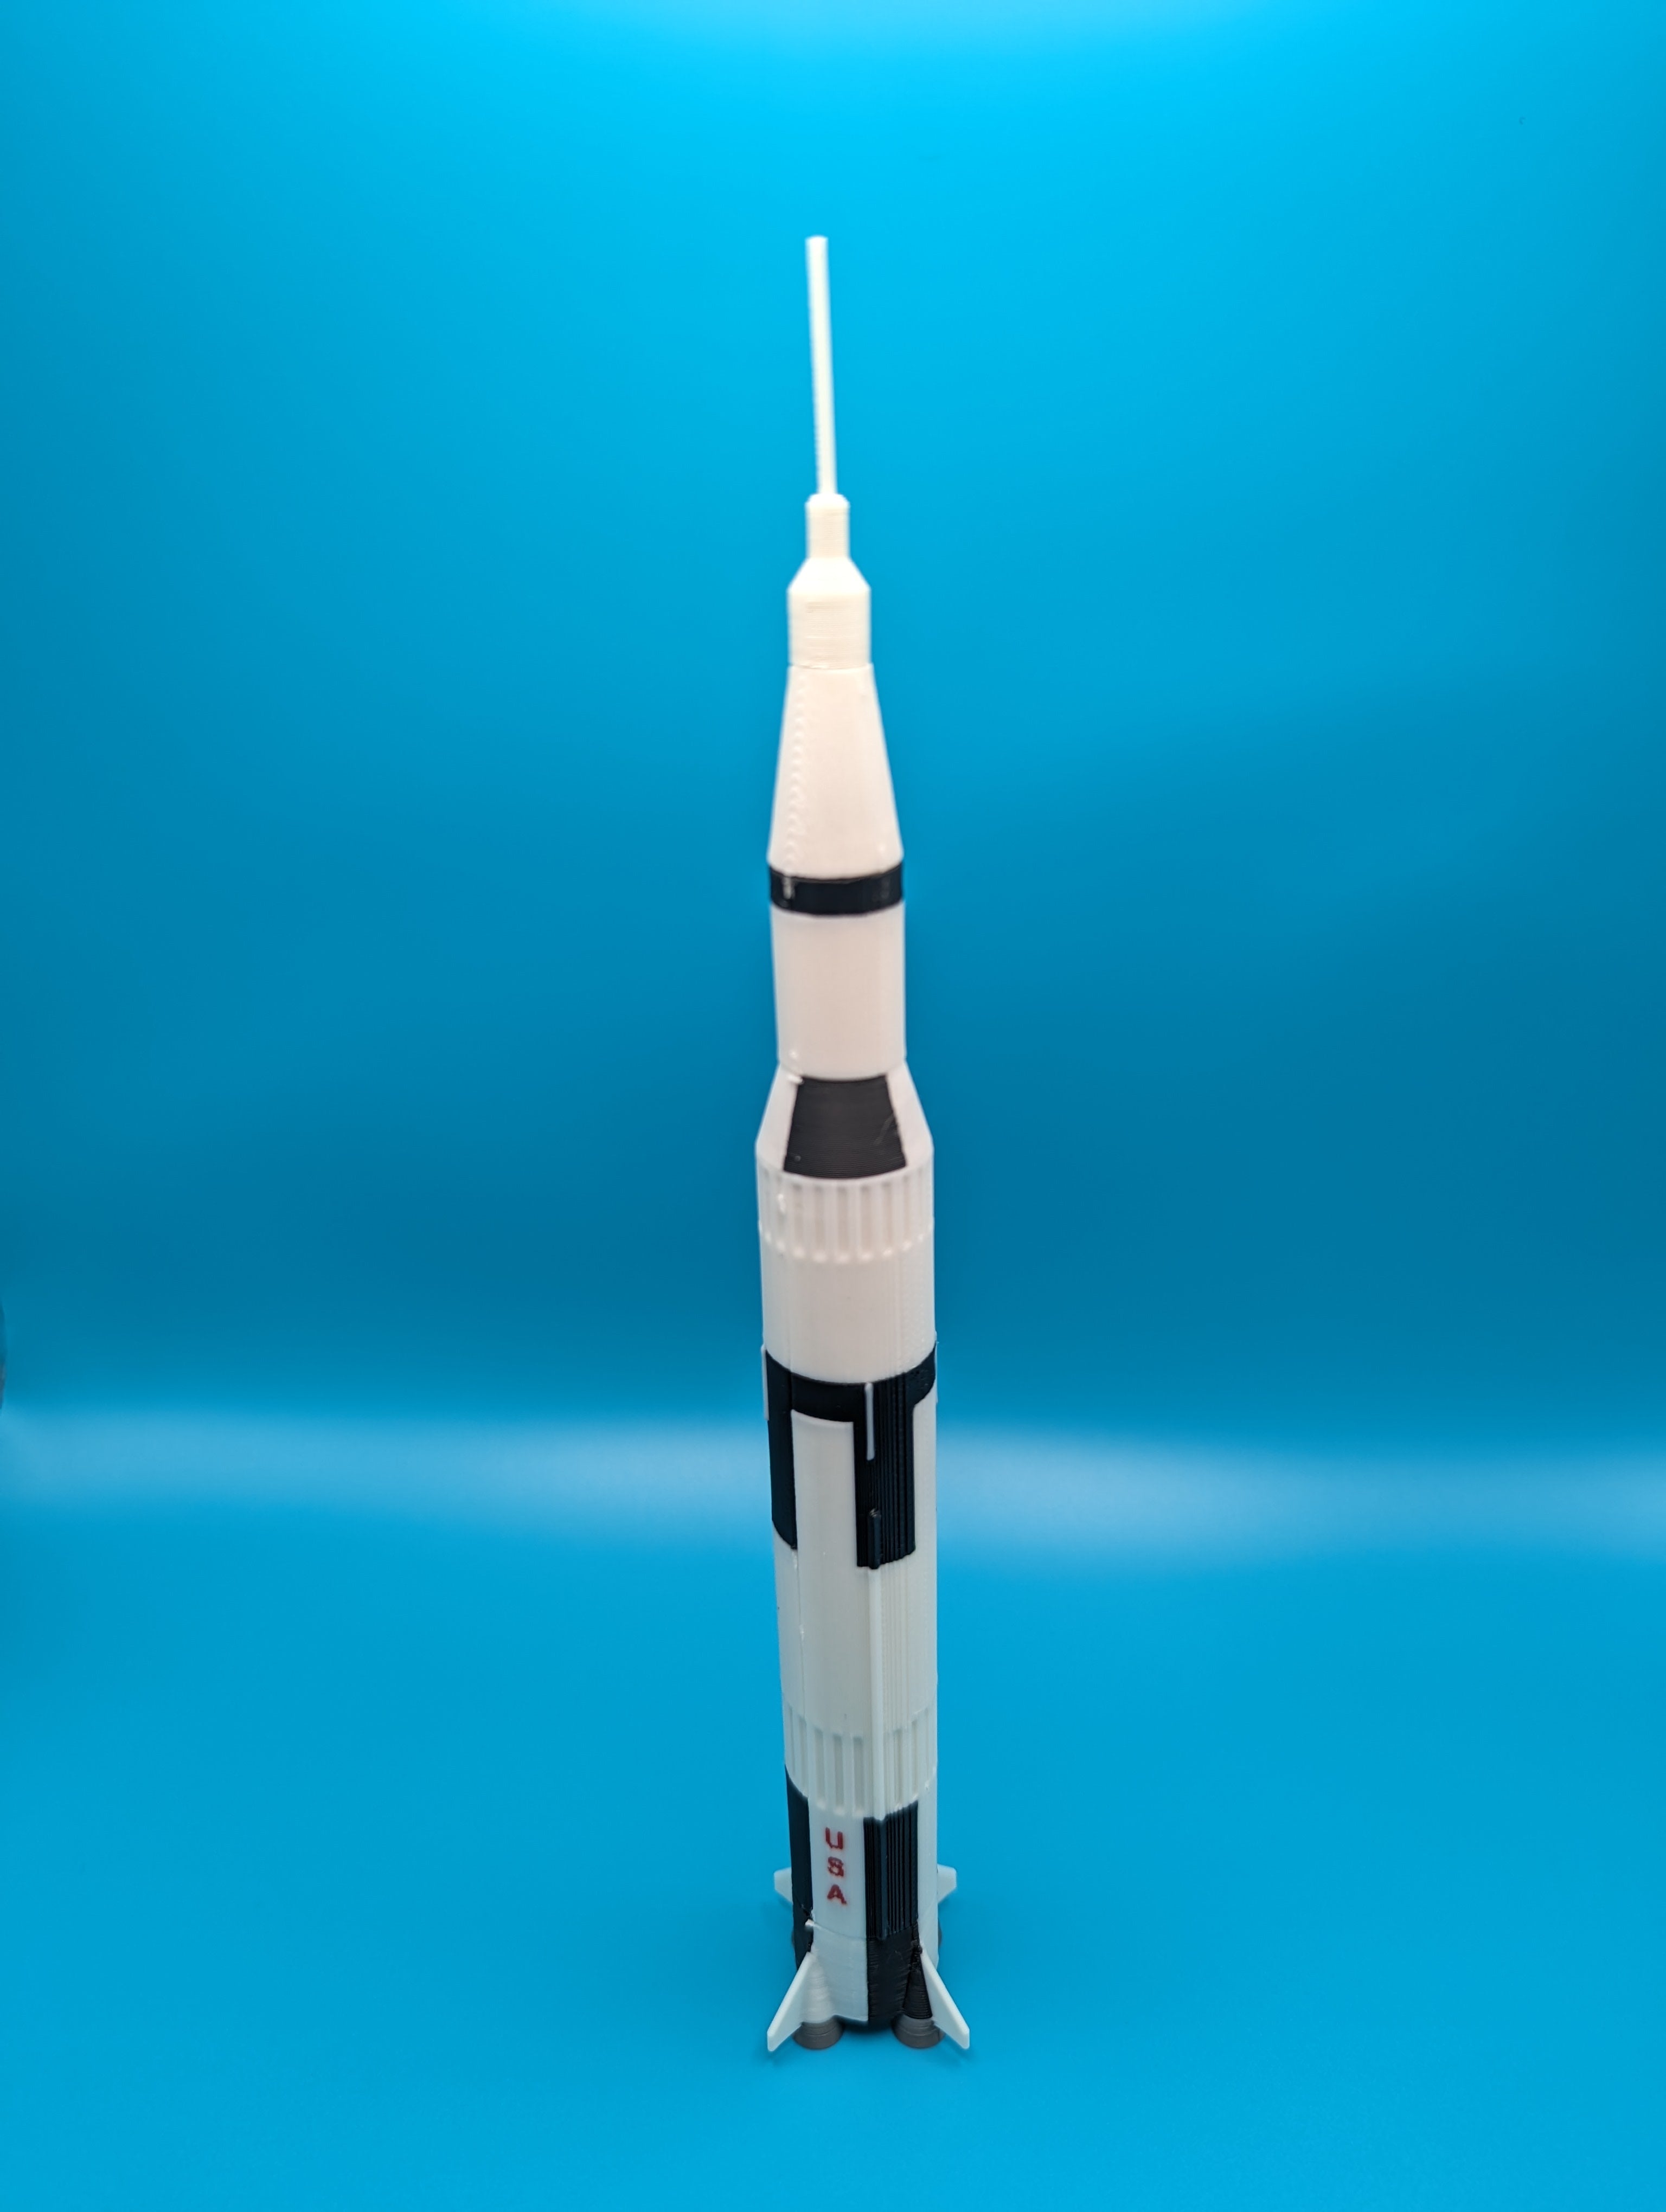 NASA Saturn V Miniature Rocket Model Kit